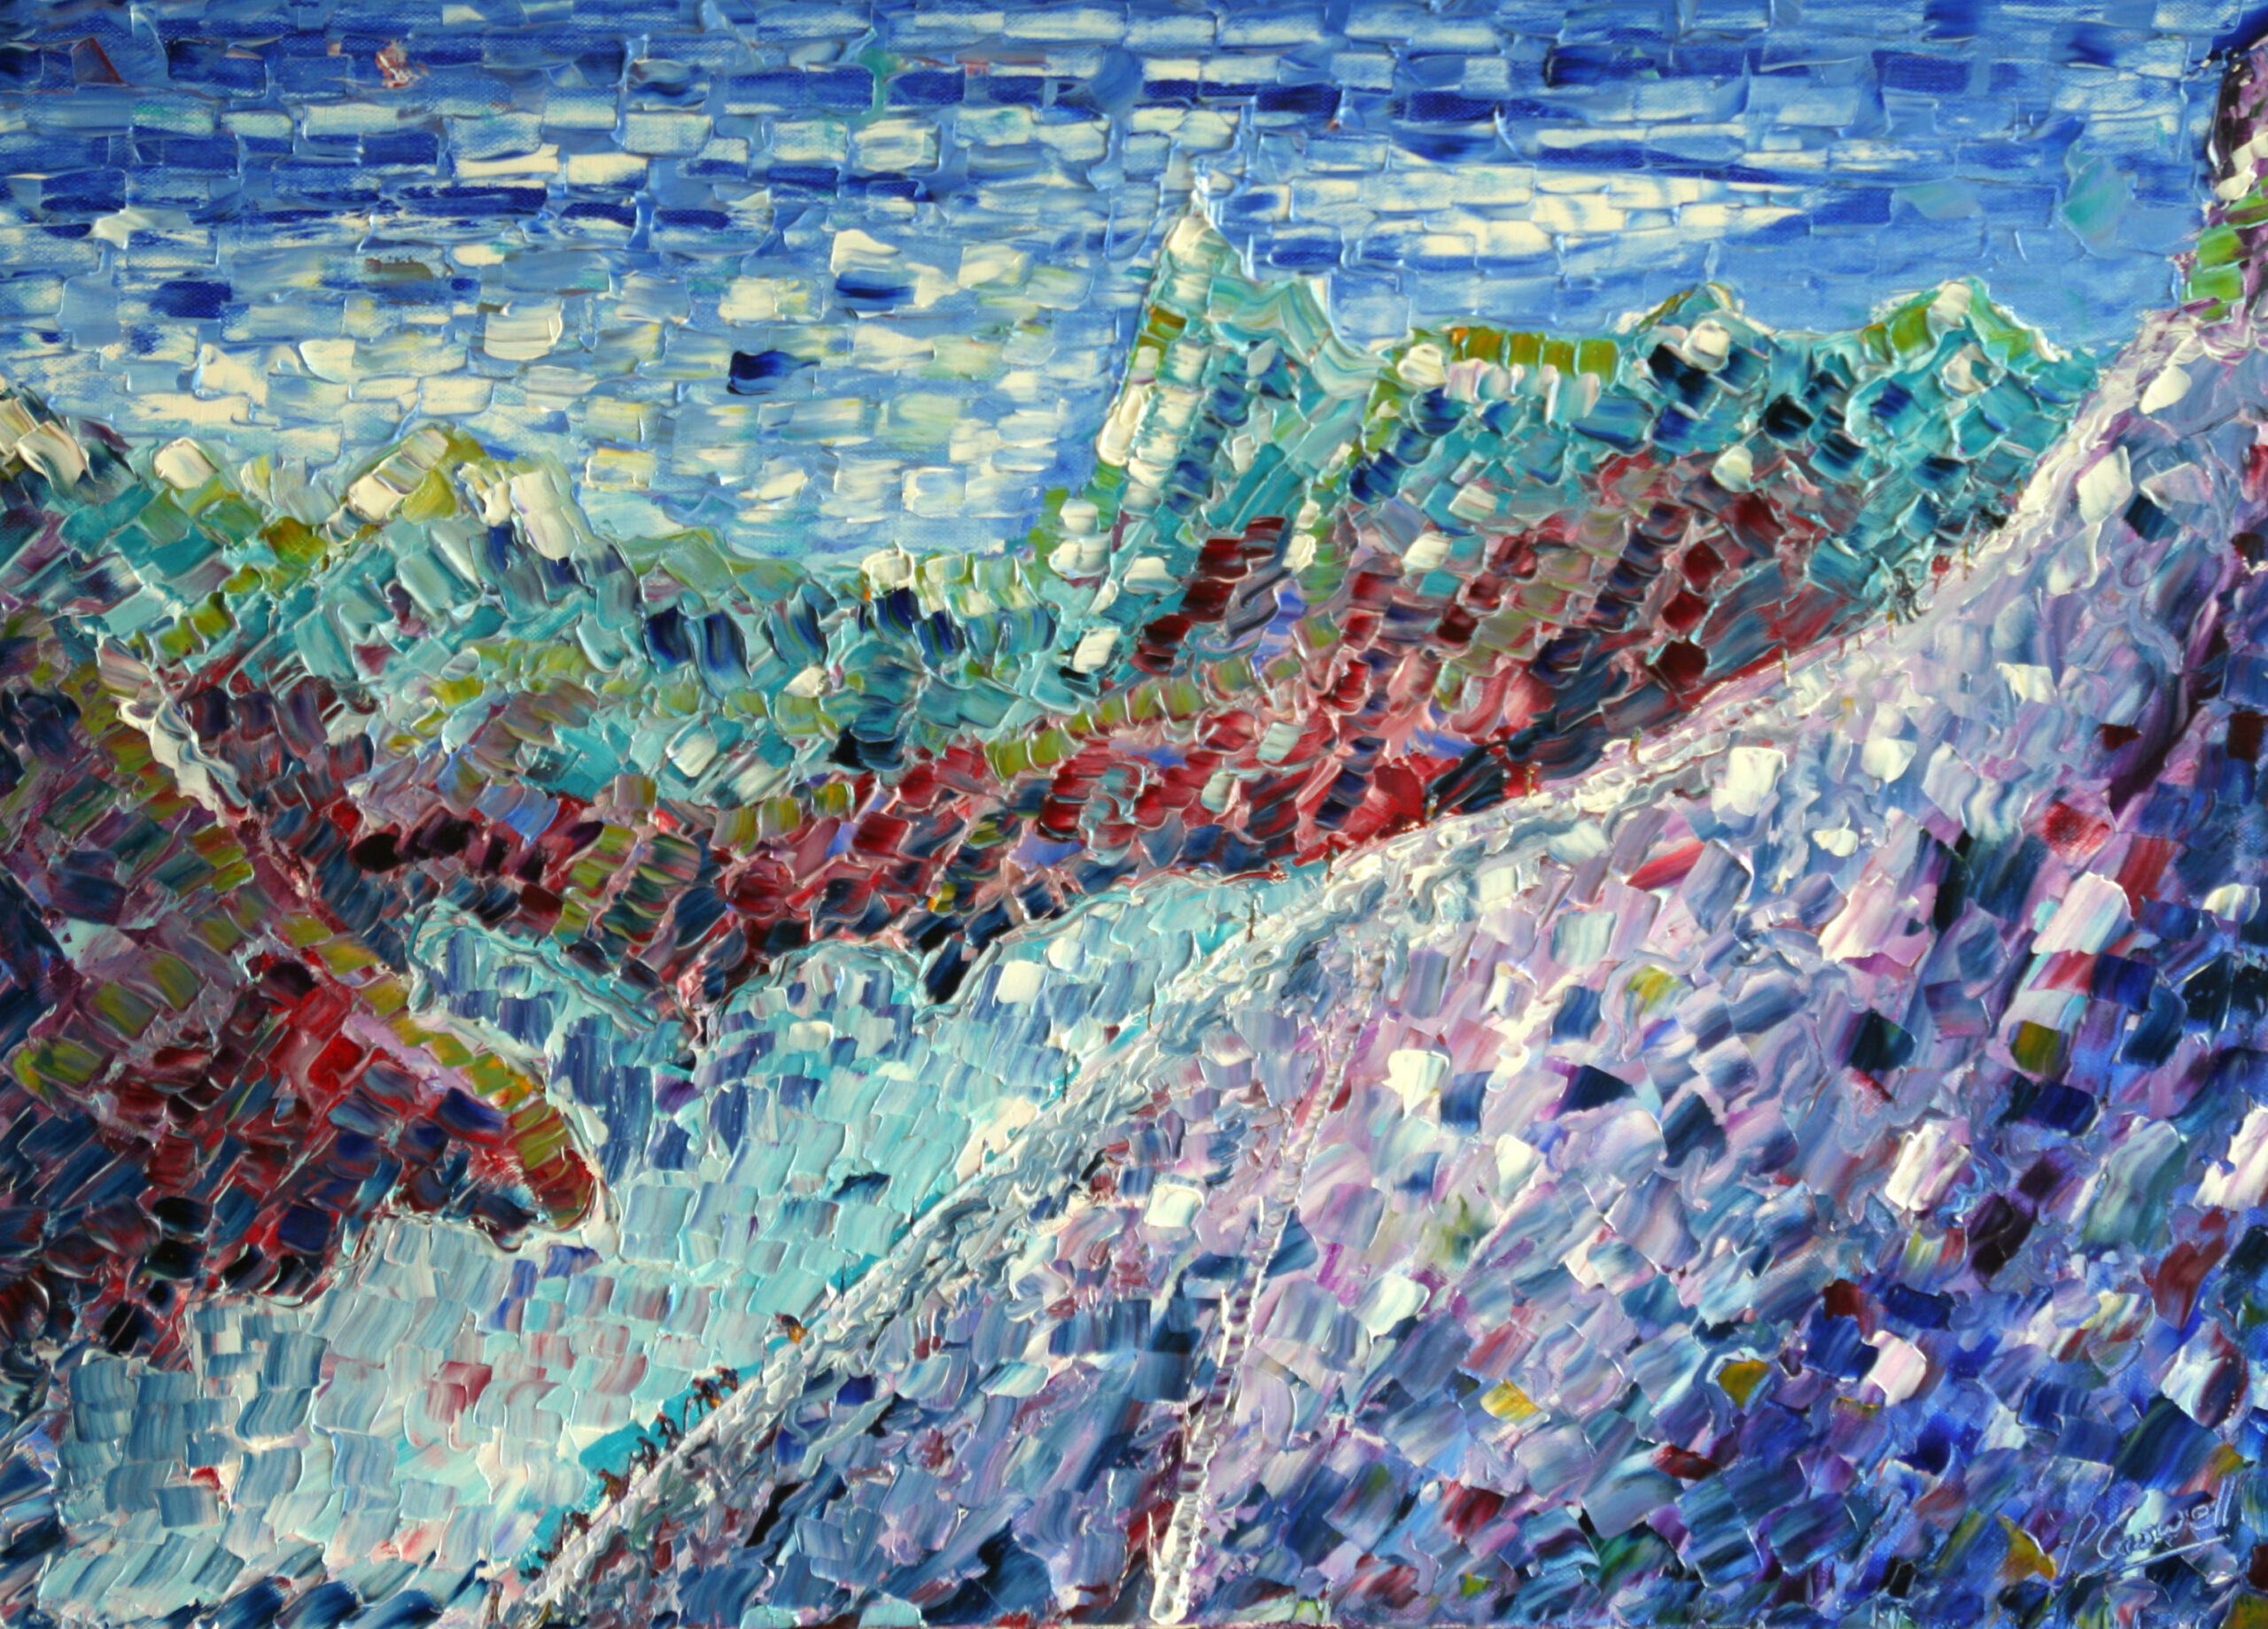 Aiguille Du Midi oil painting on block canvas.